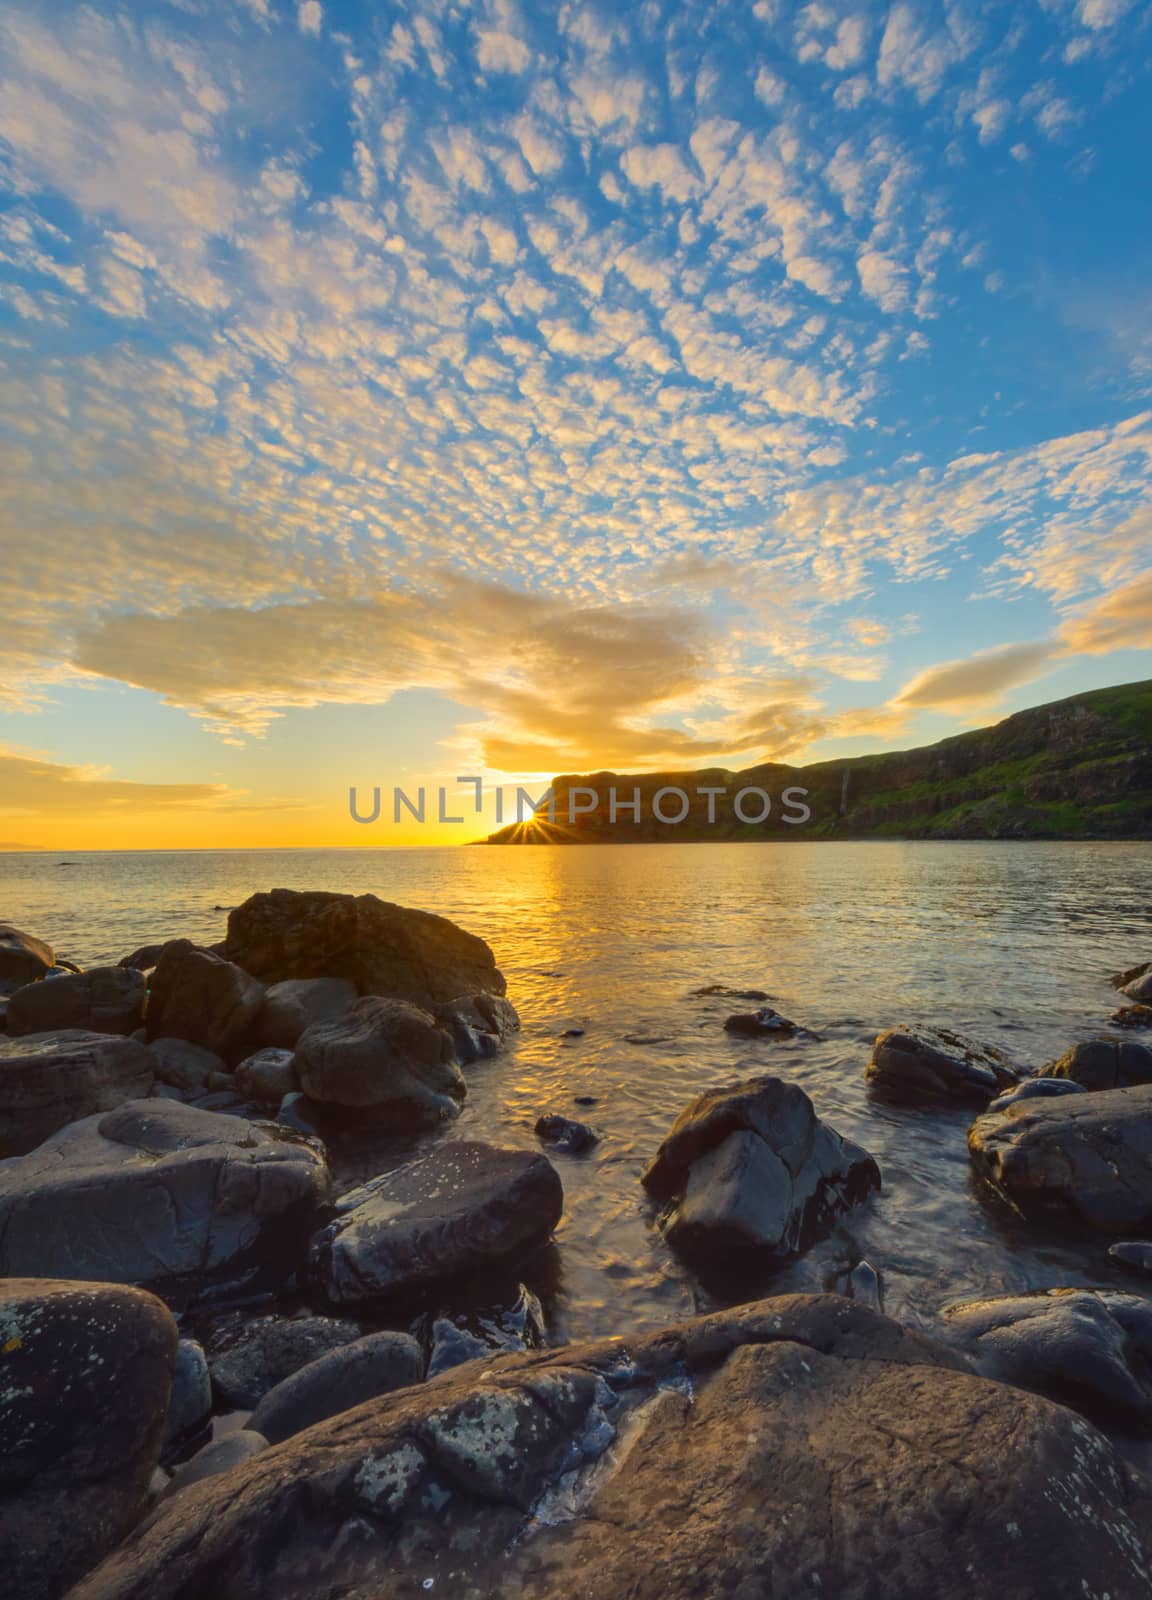 An amazing sunset on the Isle of Skye in Scotland